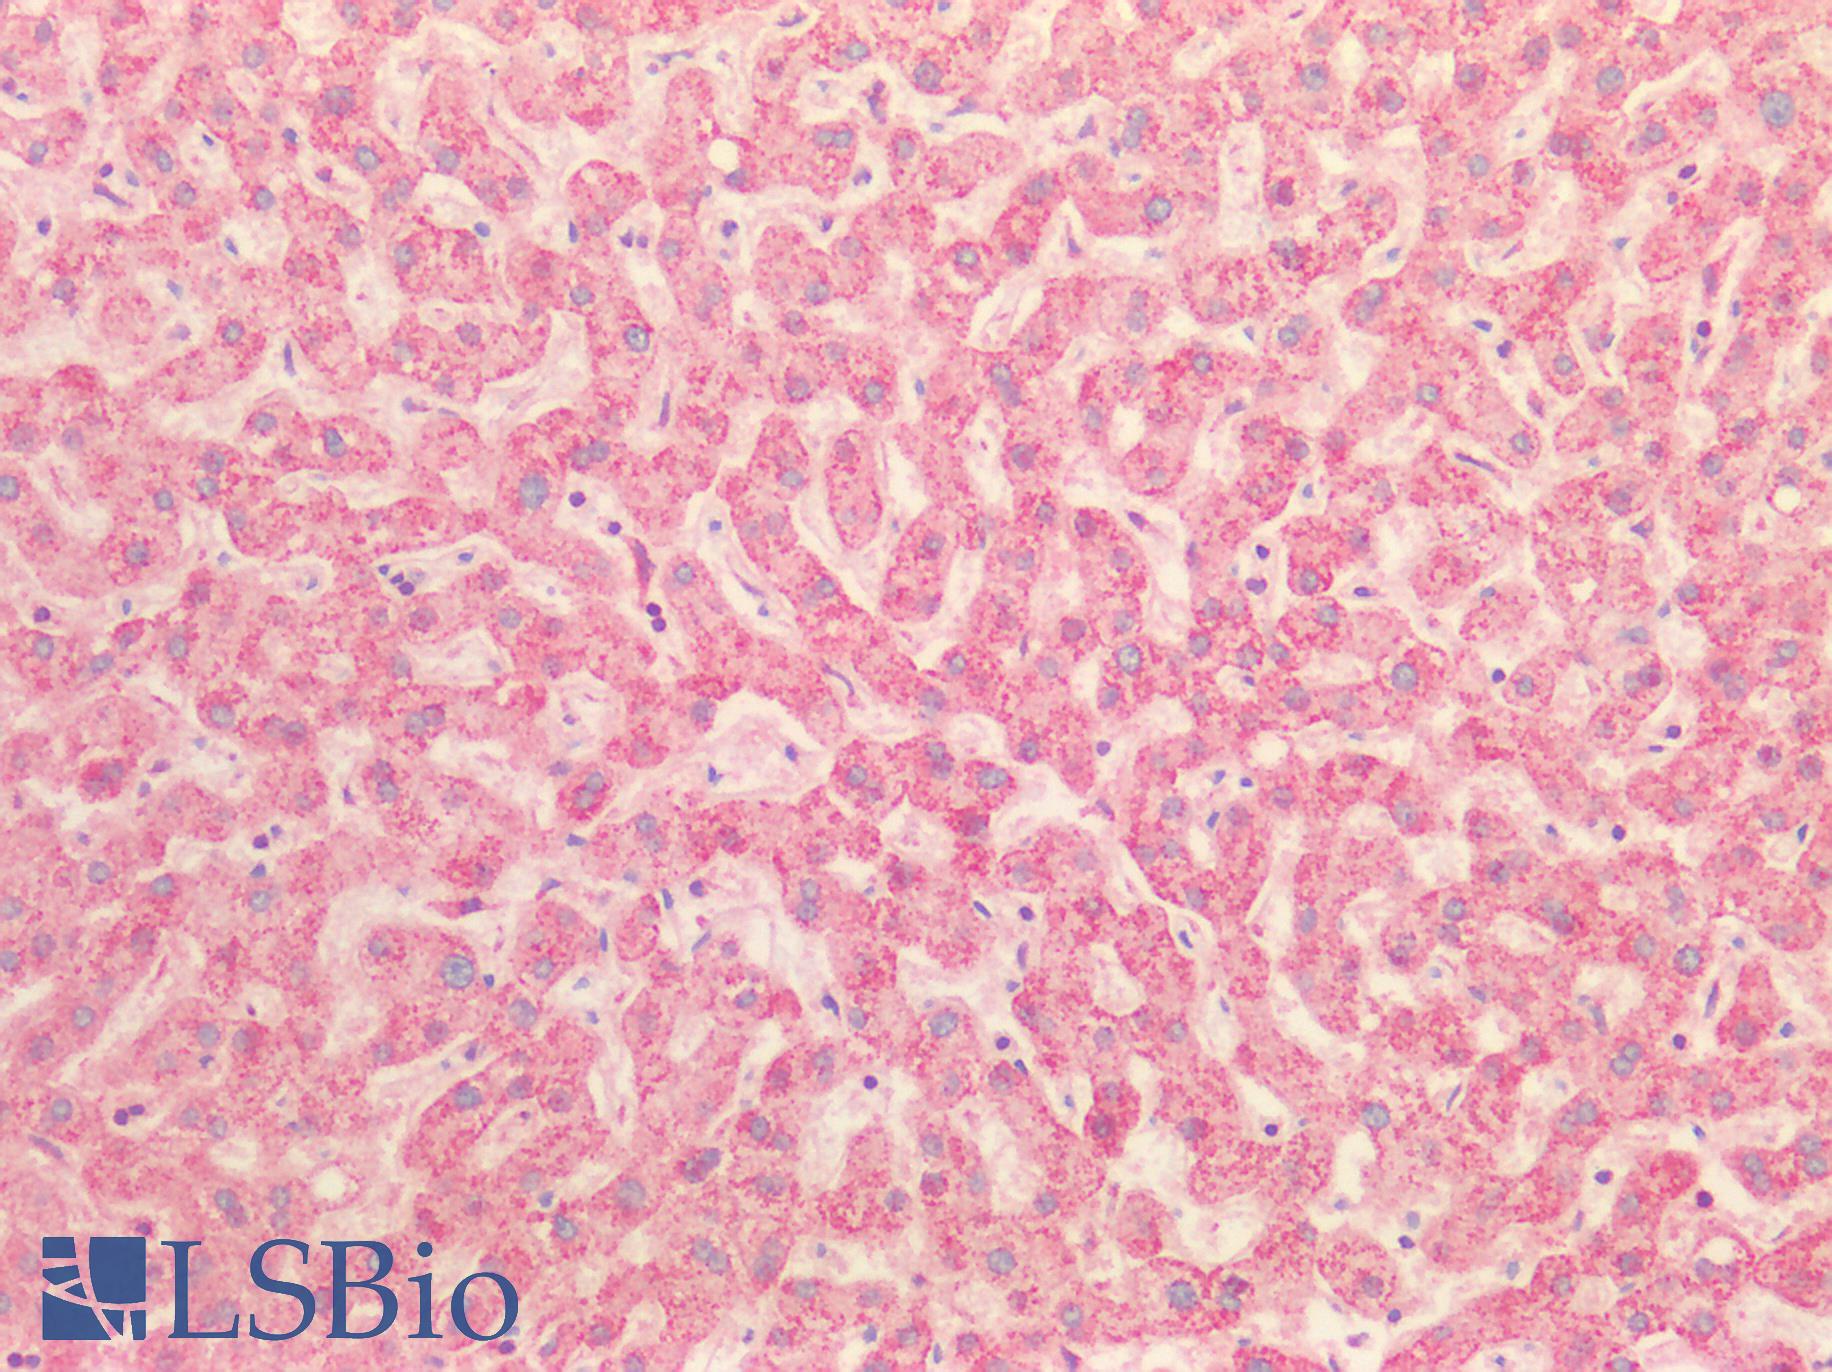 HSP90B1 / GP96 / GRP94 Antibody - Human Liver: Formalin-Fixed, Paraffin-Embedded (FFPE)